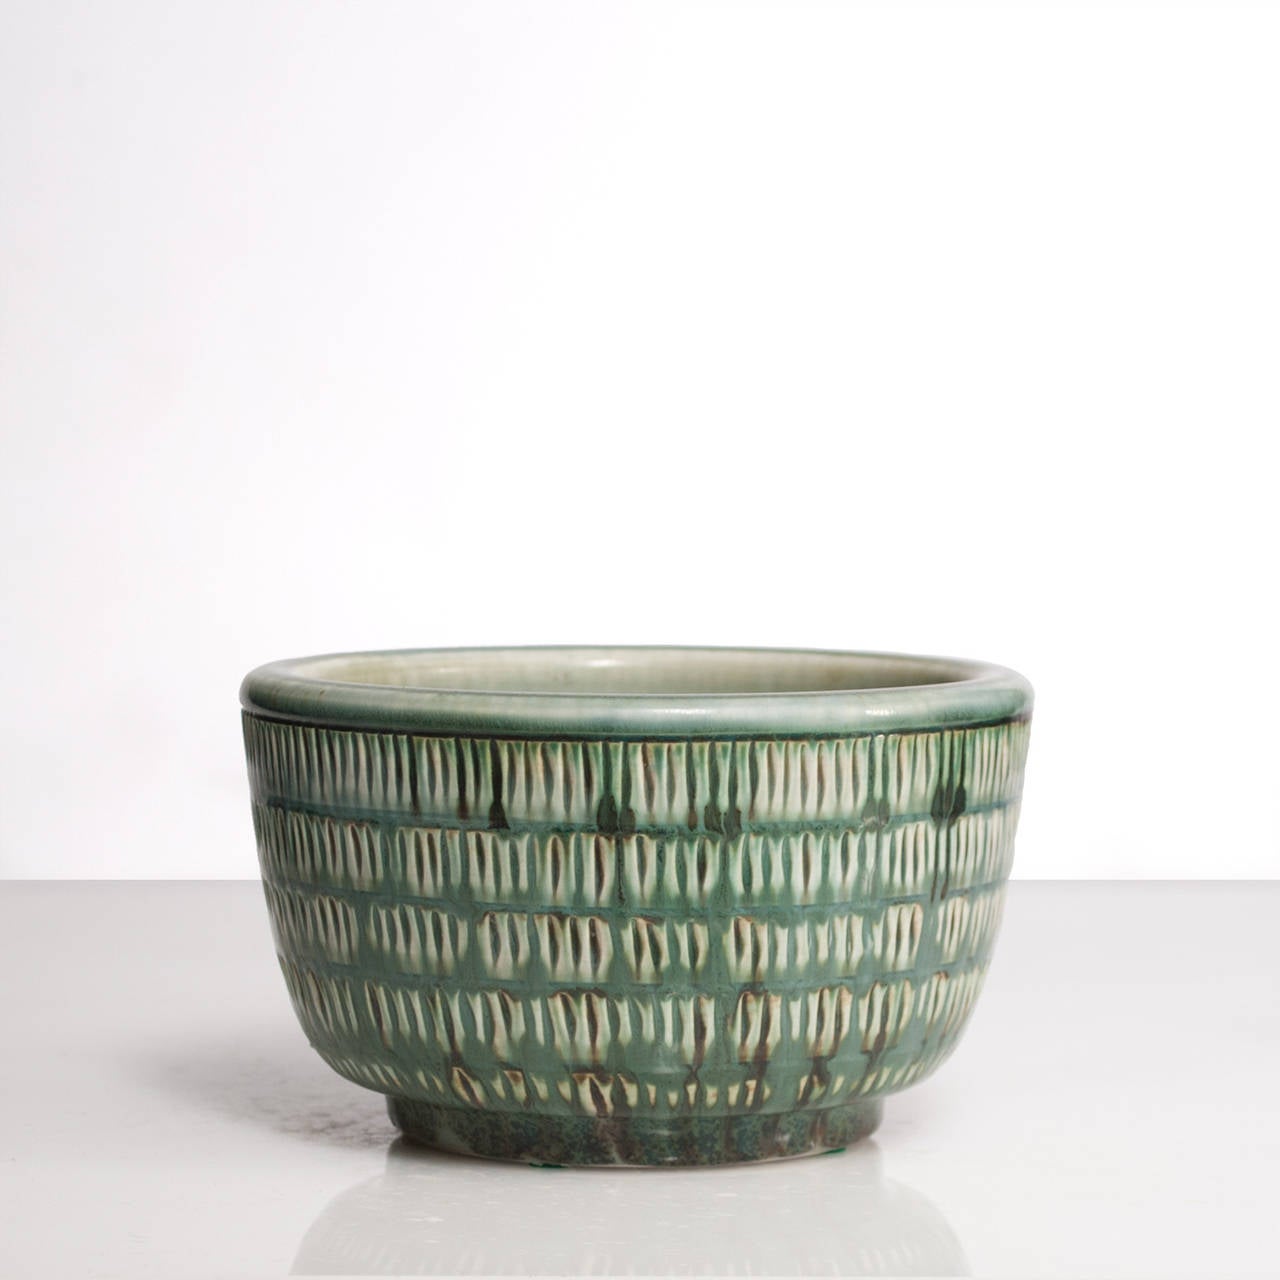 Art Deco Swedish art deco ceramic bowl by Gertrud Lonegren in green glaze.